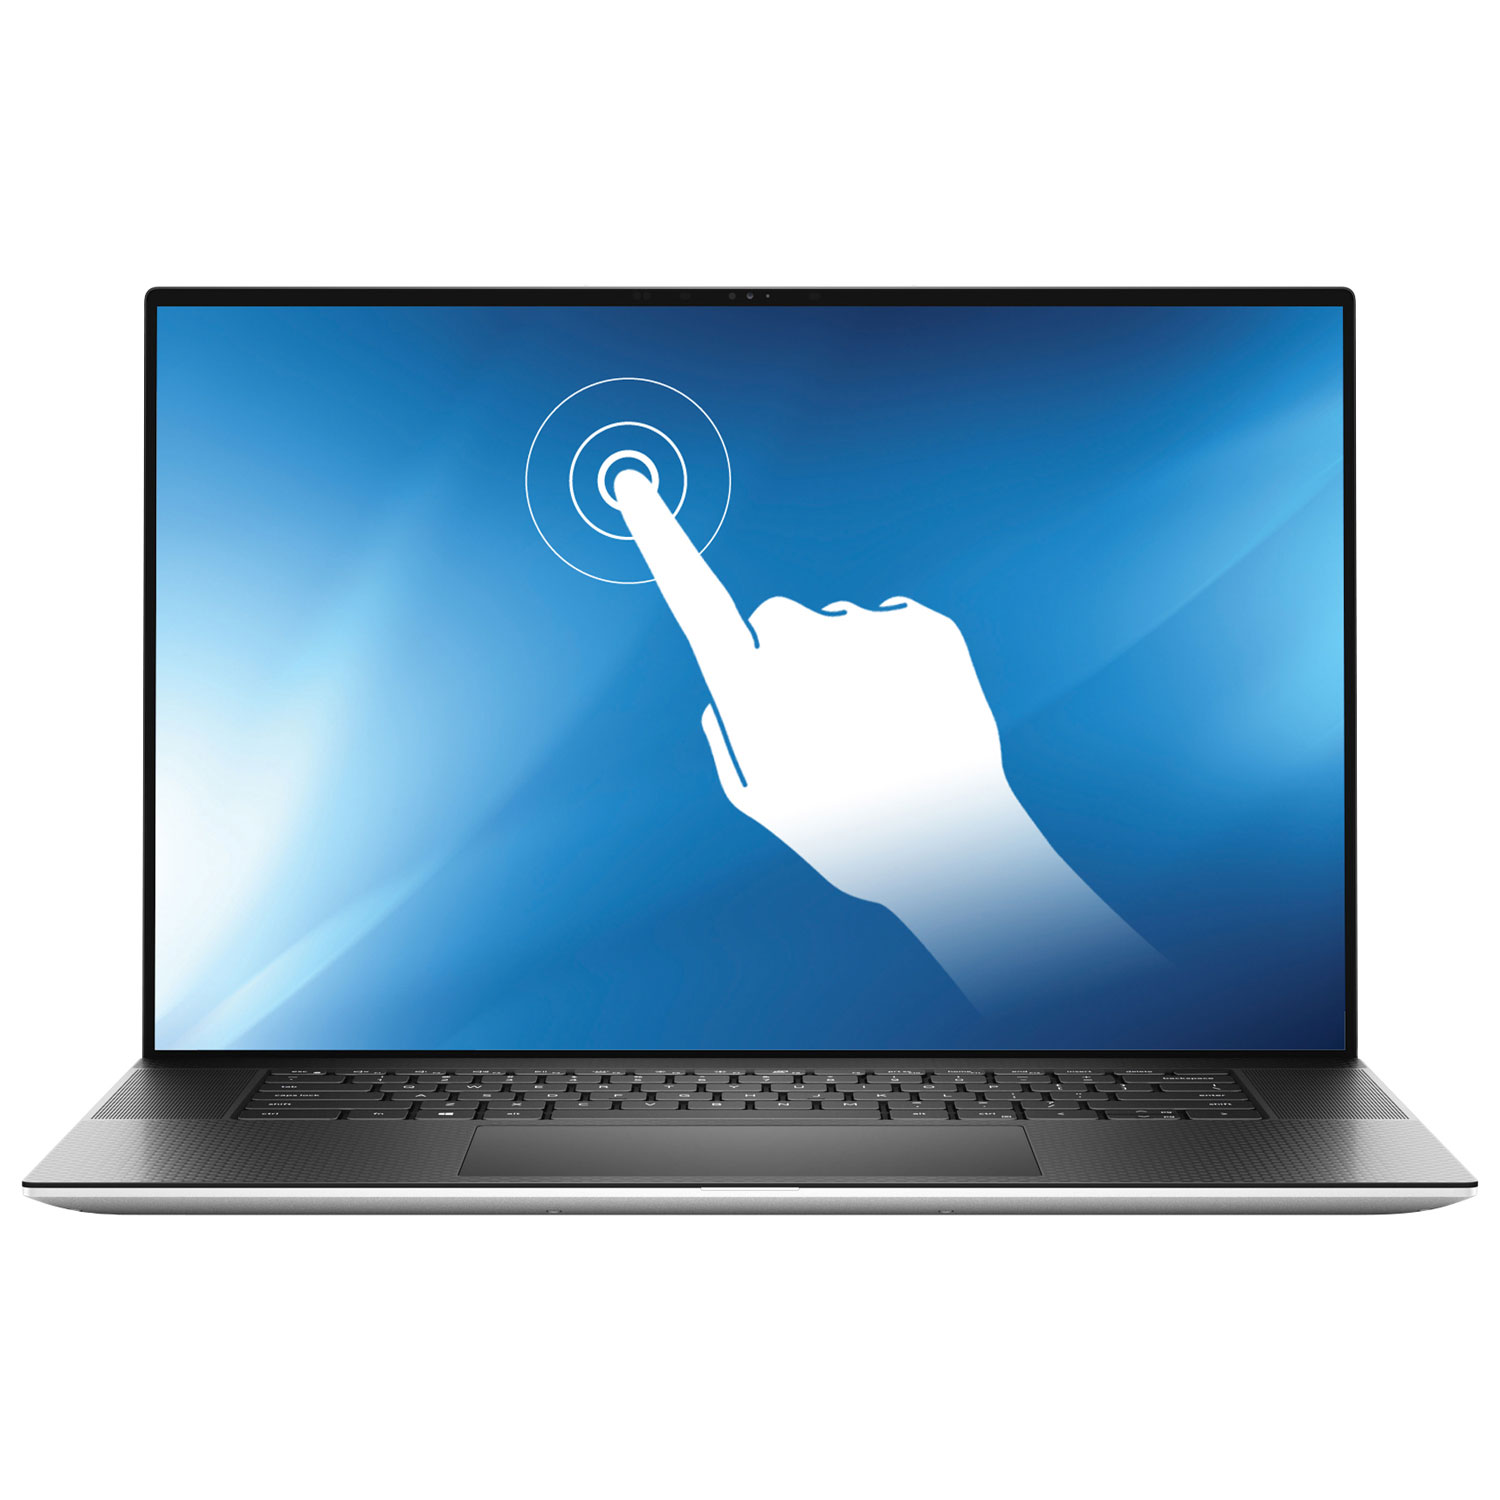 Dell XPS 17" Touchscreen Laptop - Silver (Intel Core i7-11800H/1TB SSD/16GB RAM/Windows 10) - English